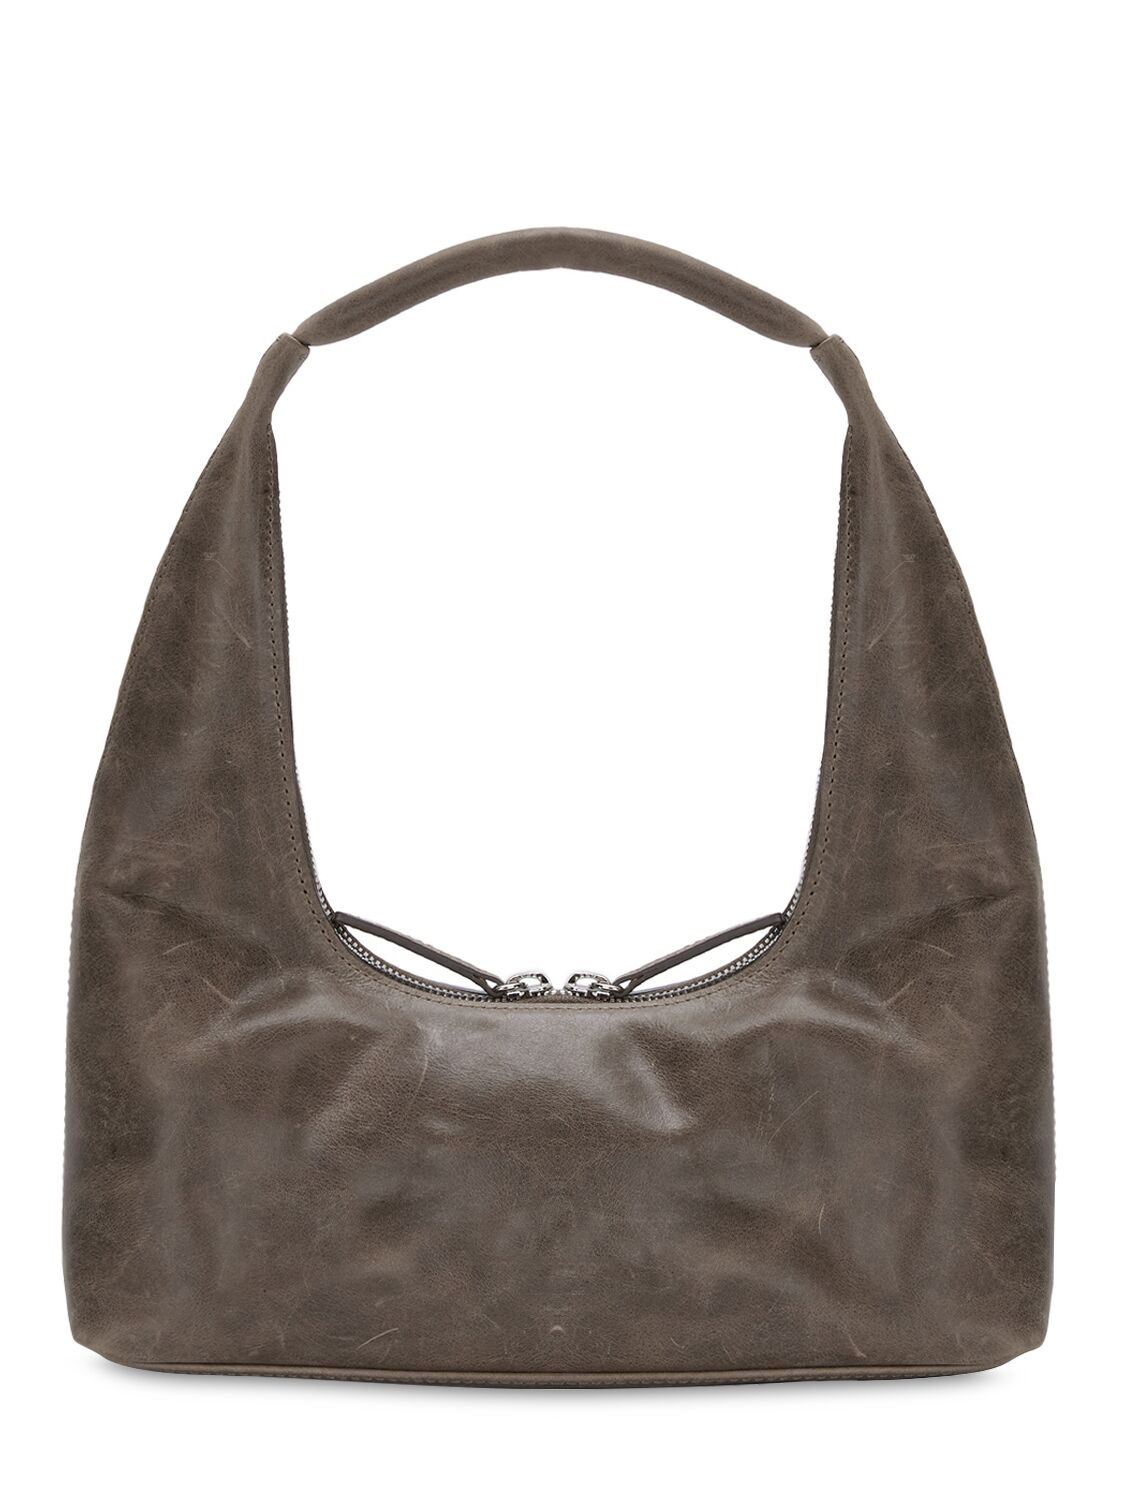 Marge Sherwood Hobo Leather Shoulder Bag In Brown Pull Up